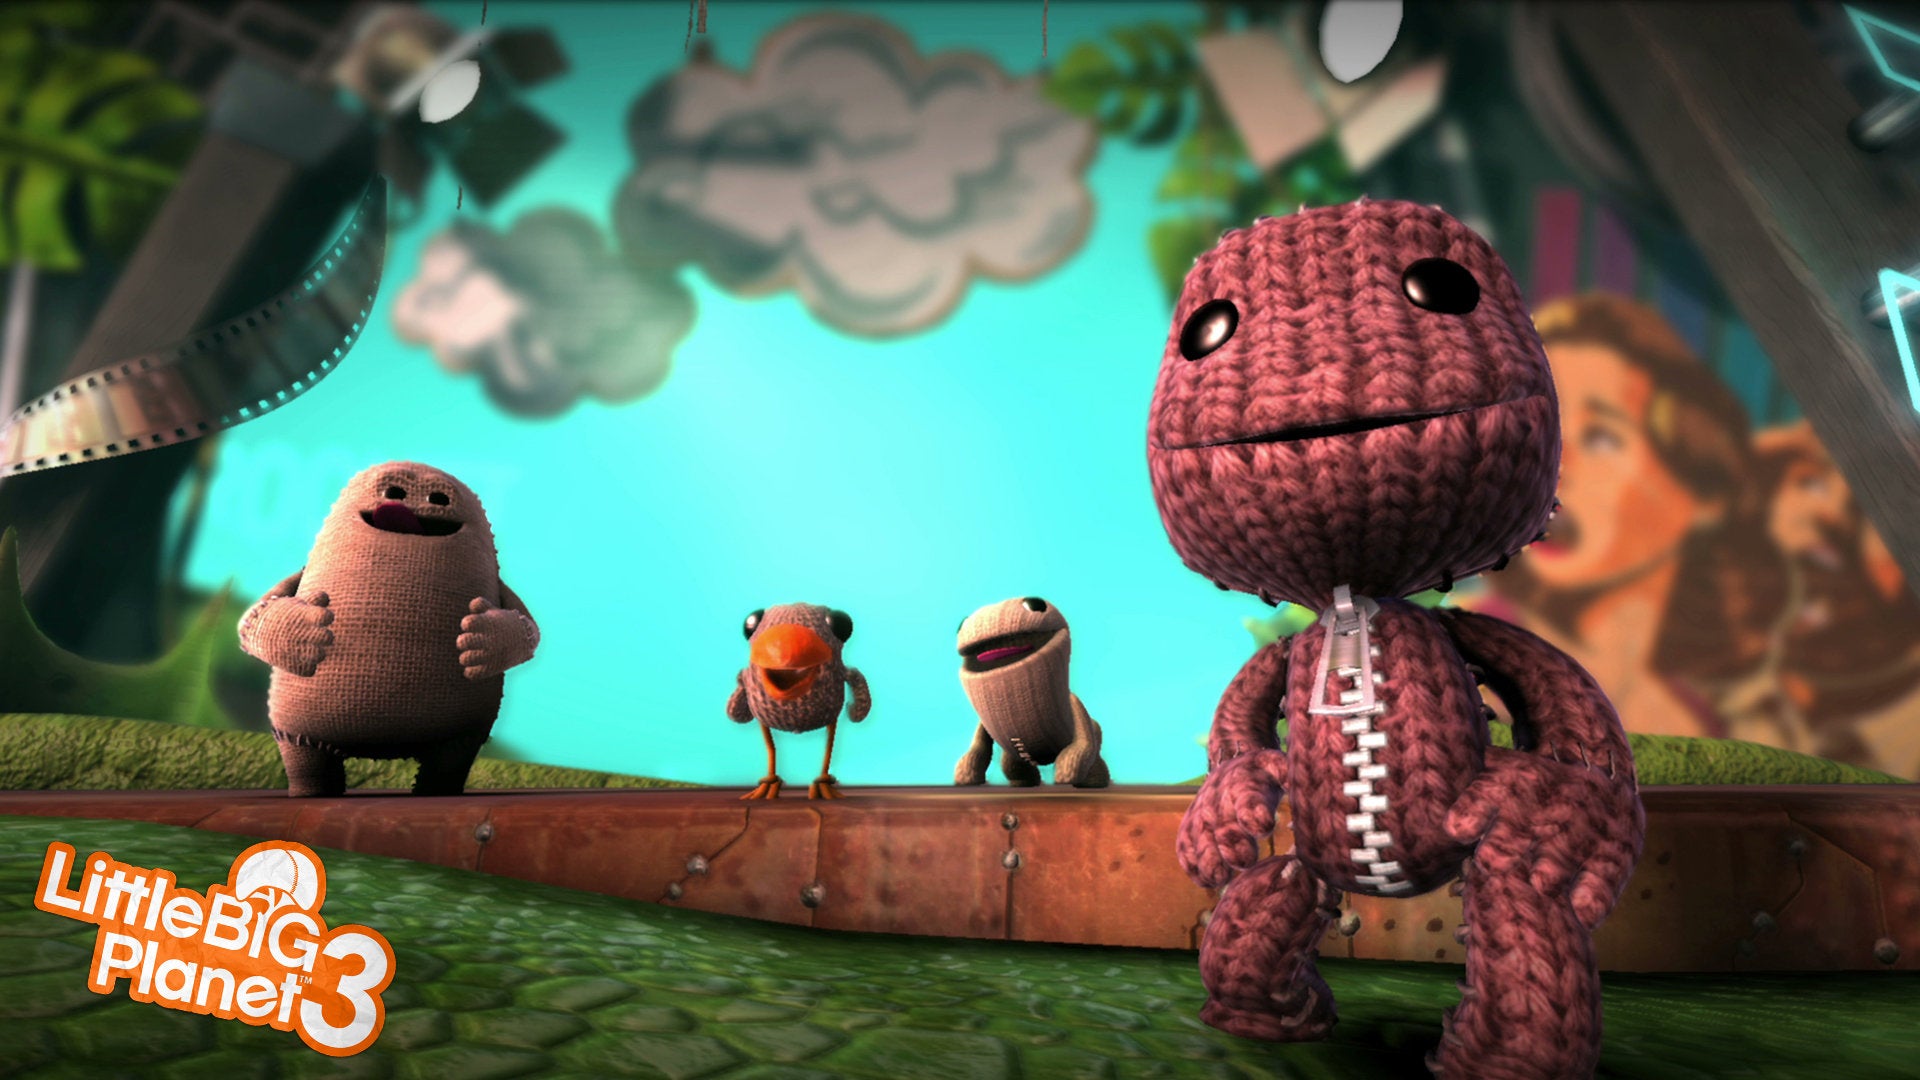 Image for LittleBigPlanet 3: PS4 vs. PS3 comparison video